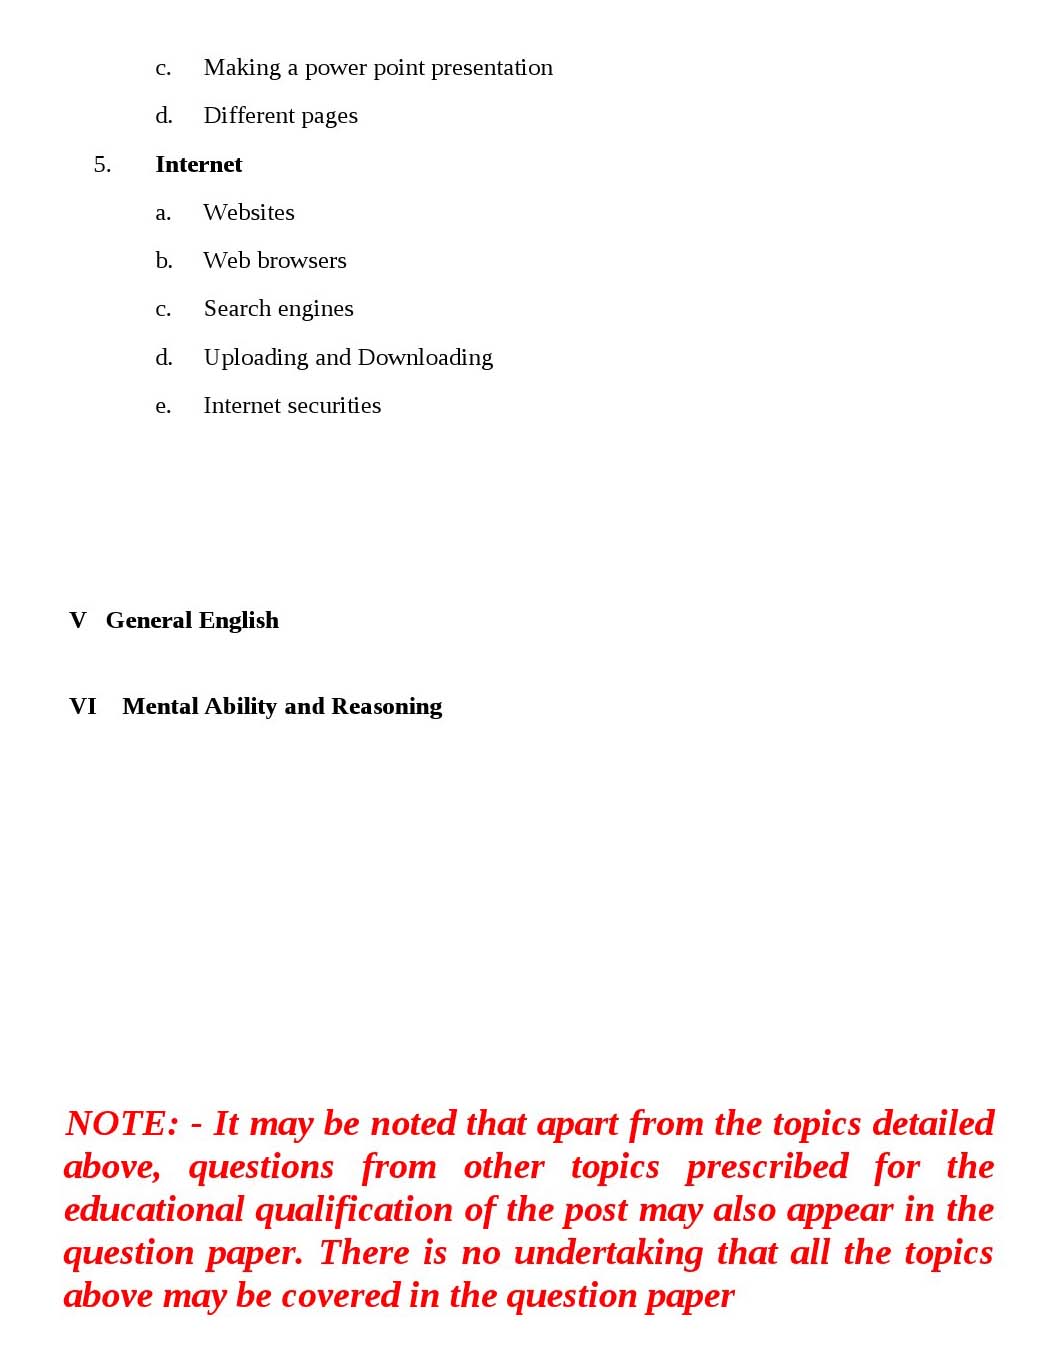 Kerala PSC Stenographer Exam Syllabus May 2020 - Notification Image 4